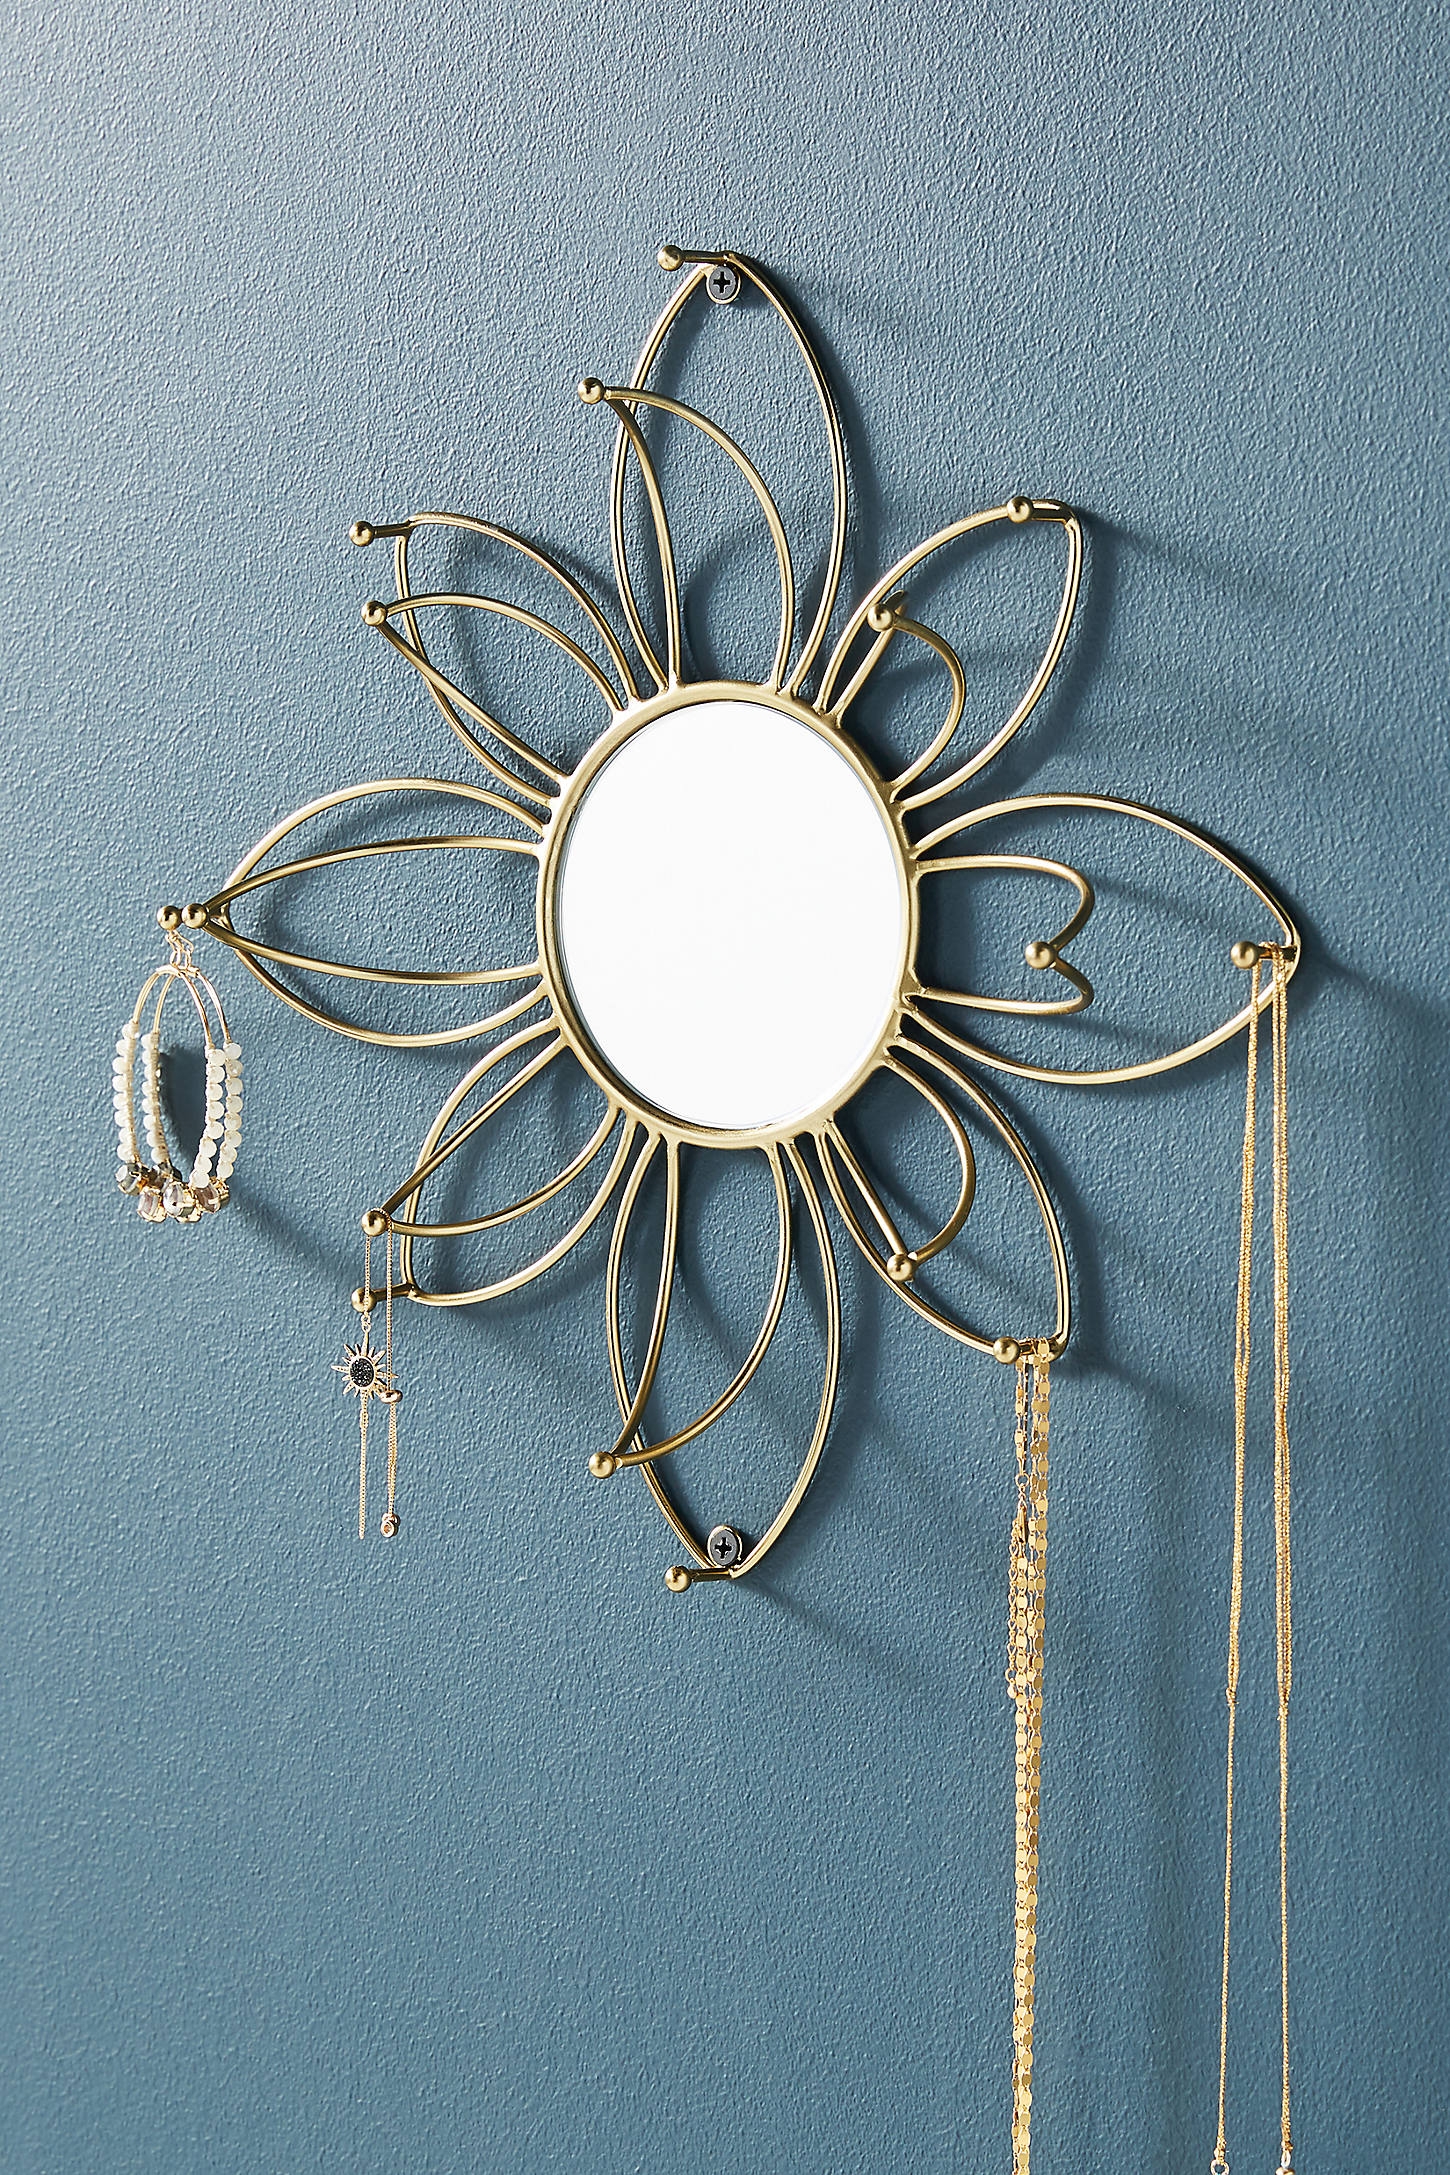 Mirrored Flower Jewelry Organizer - Image 0